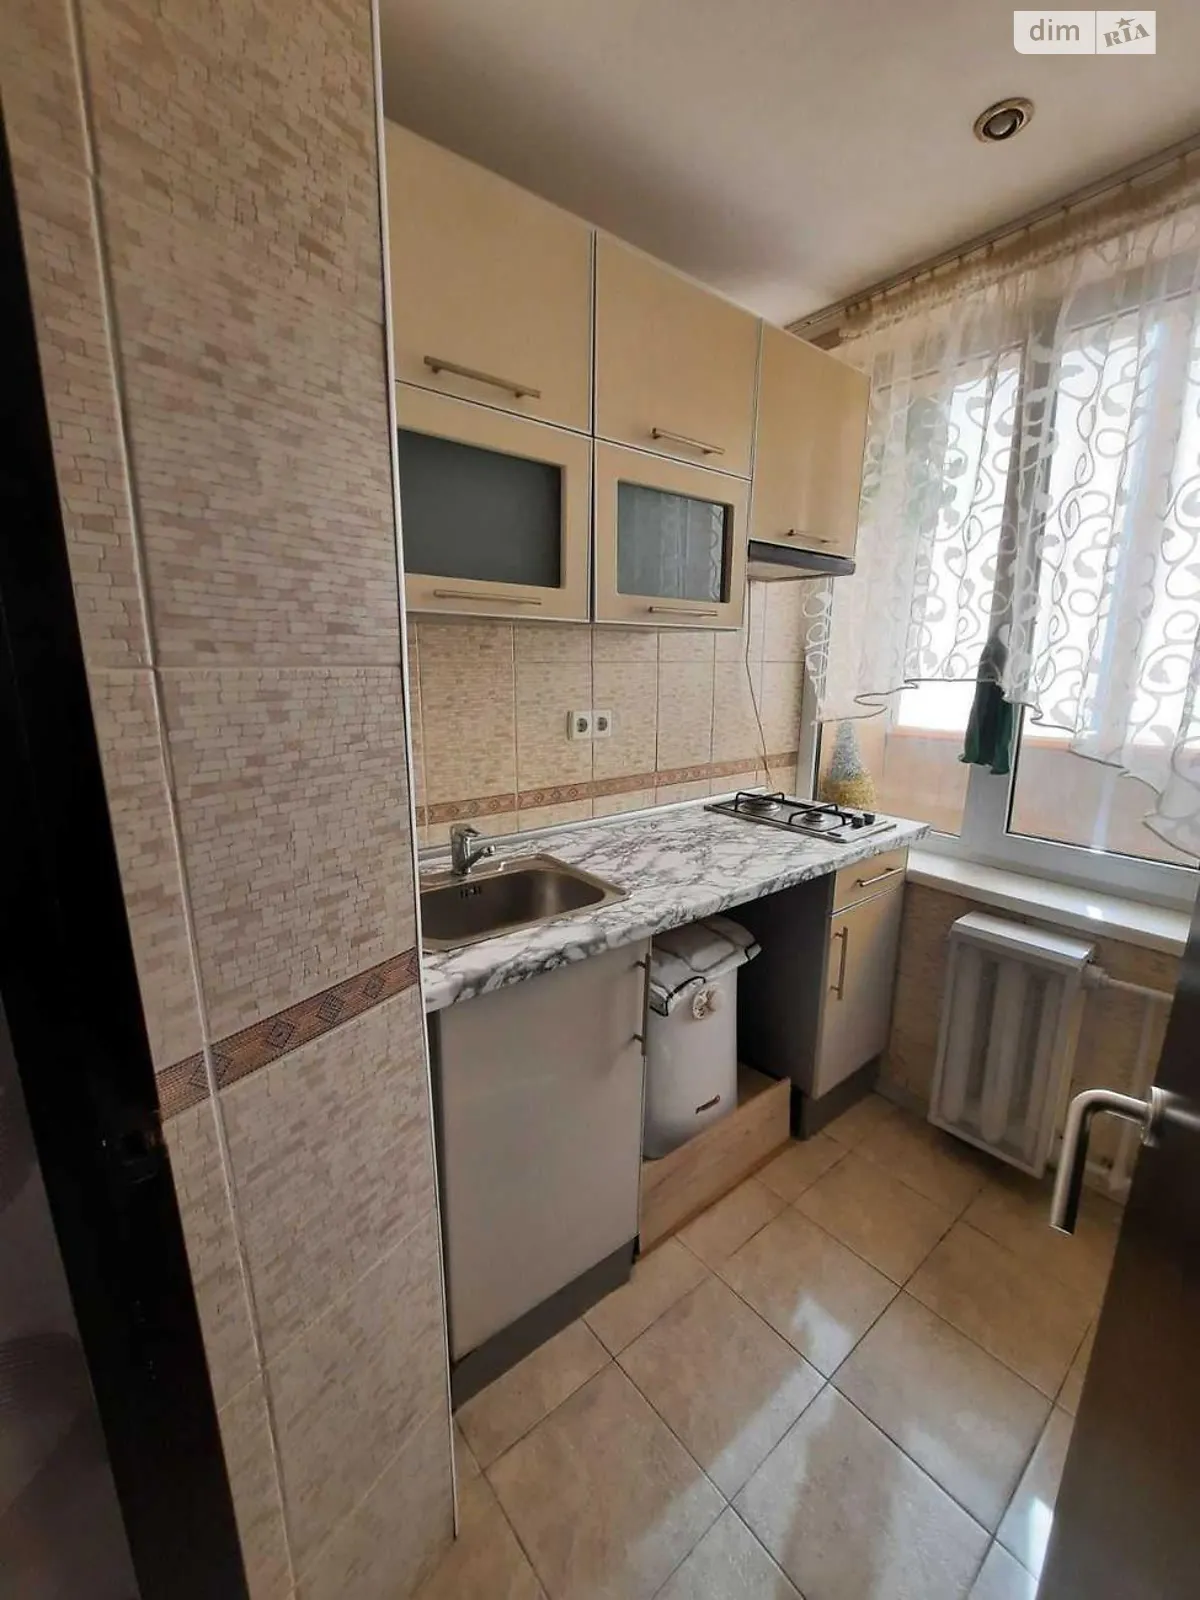 Продается комната 22 кв. м в Киеве, цена: 33999 $ - фото 1